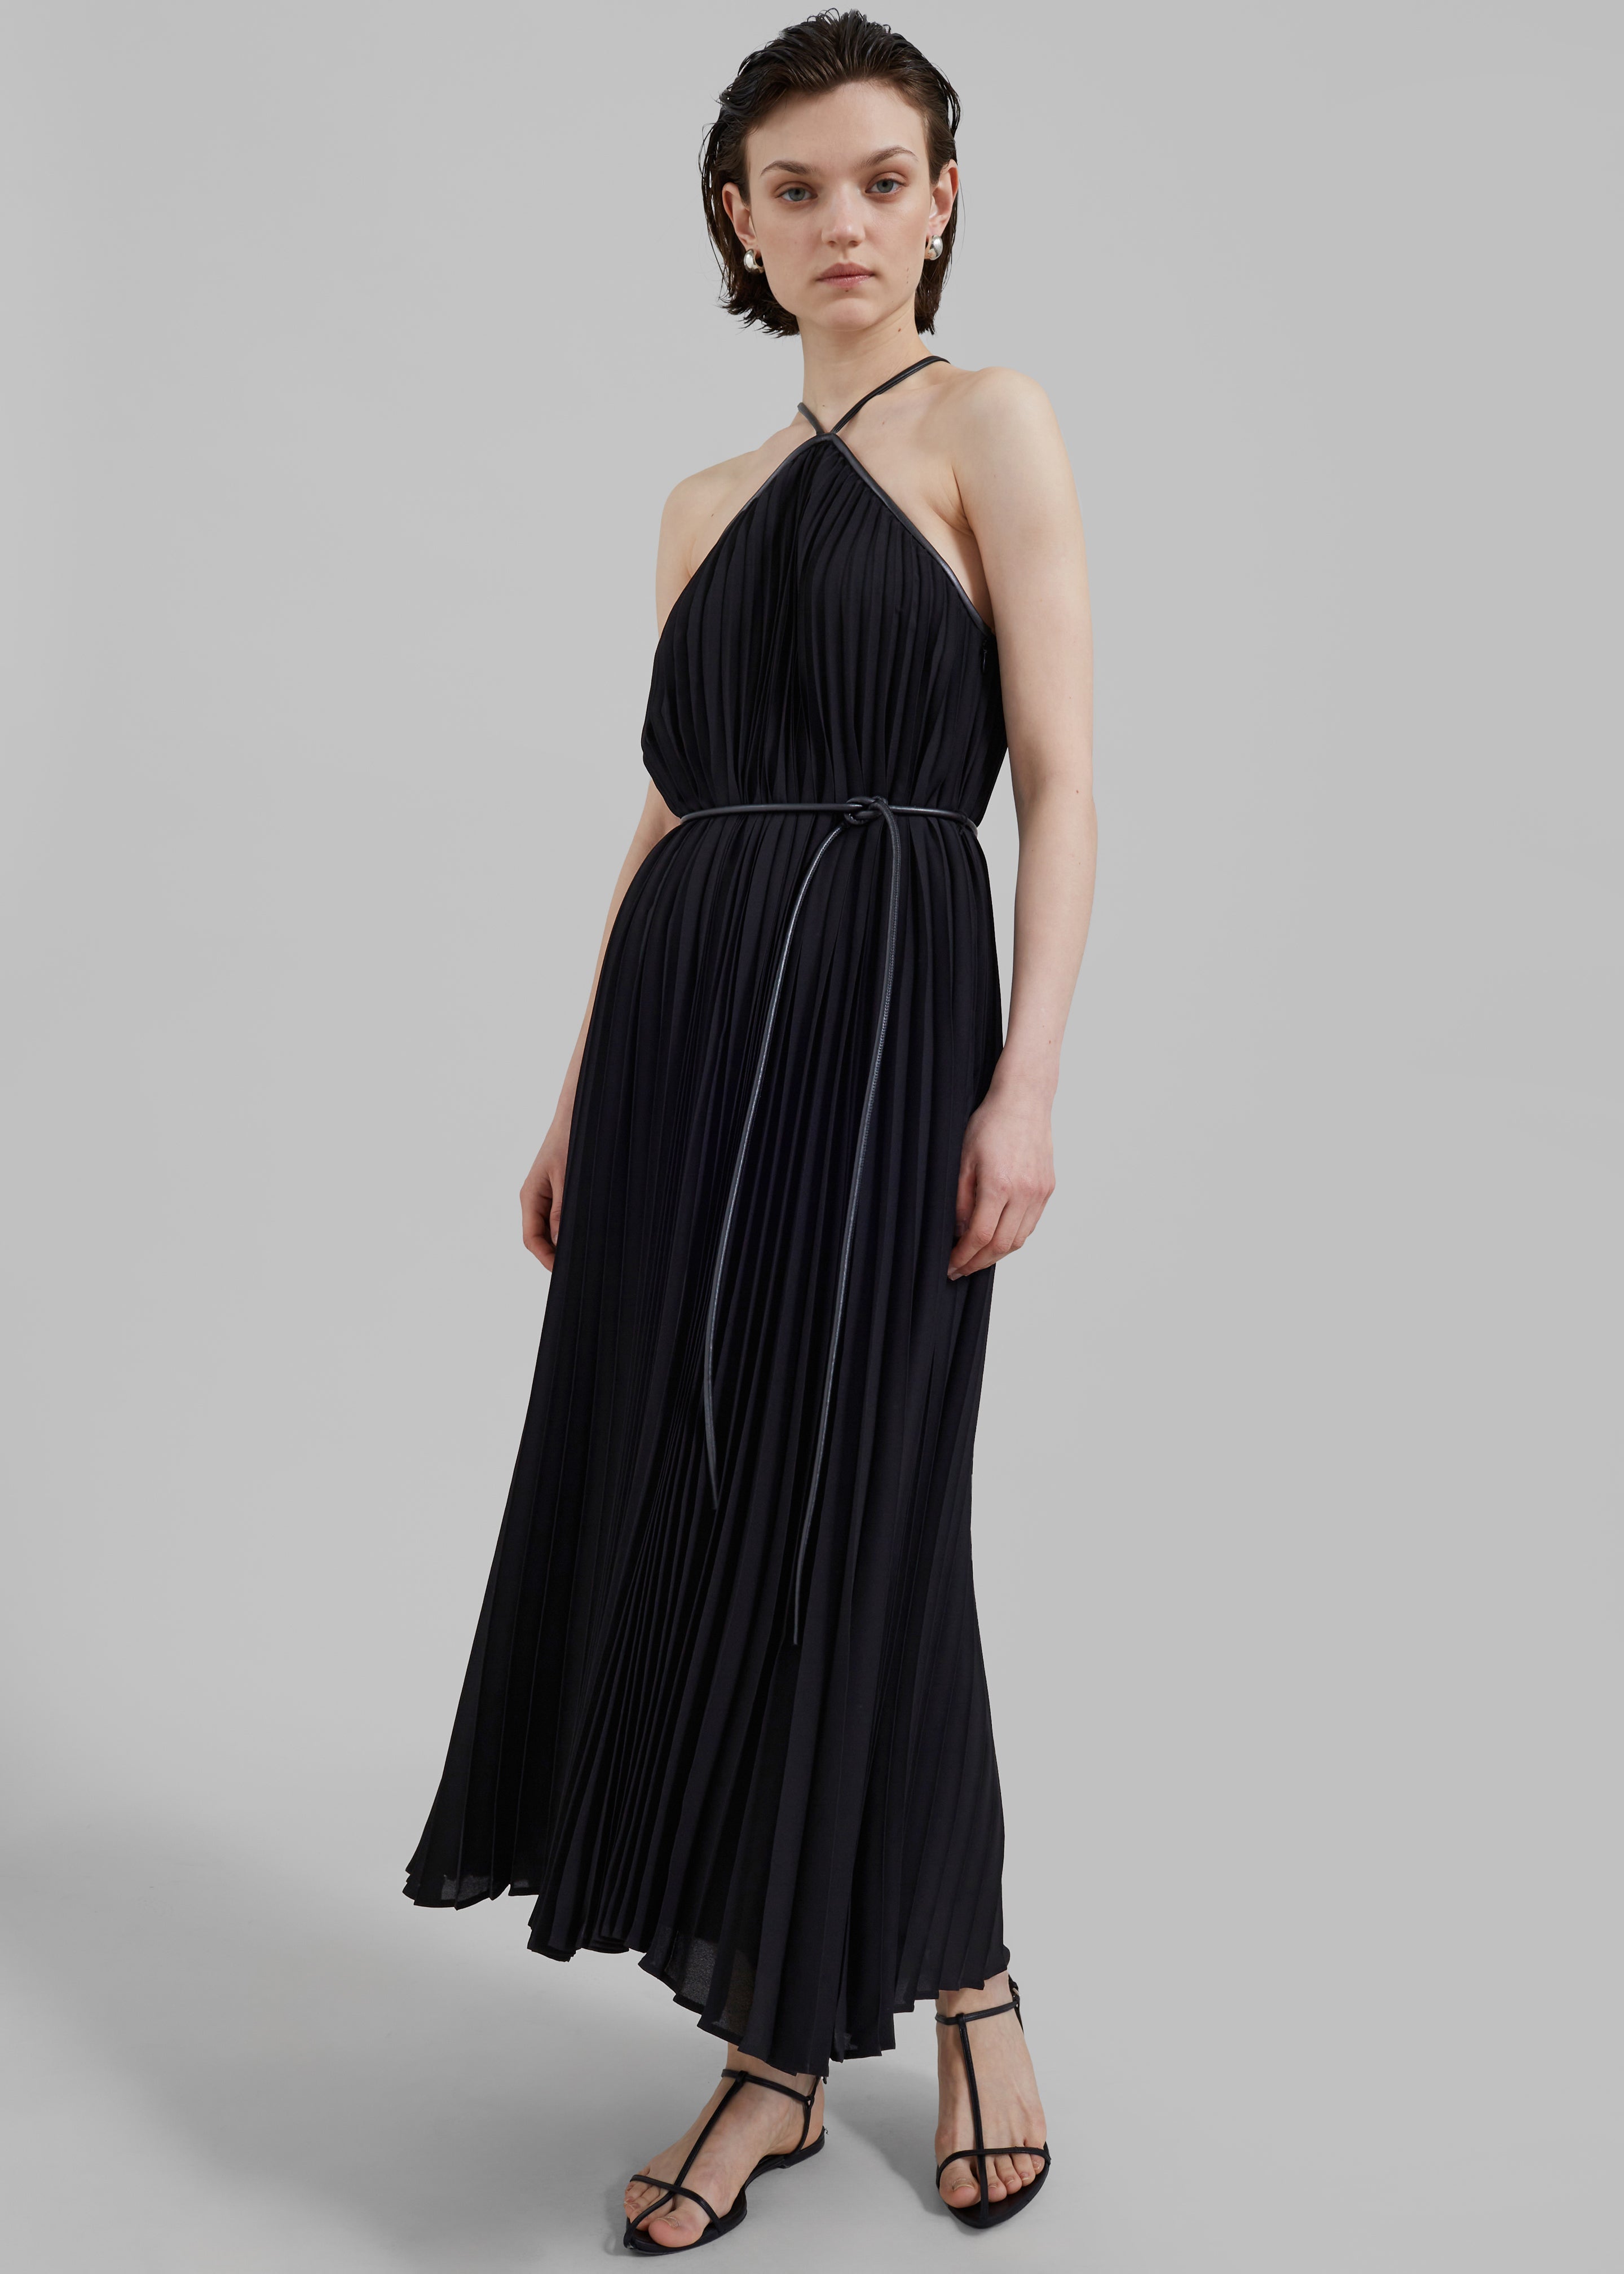 Proenza Schouler White Label Celeste Lightweight Crepe Dress  - Black - 4